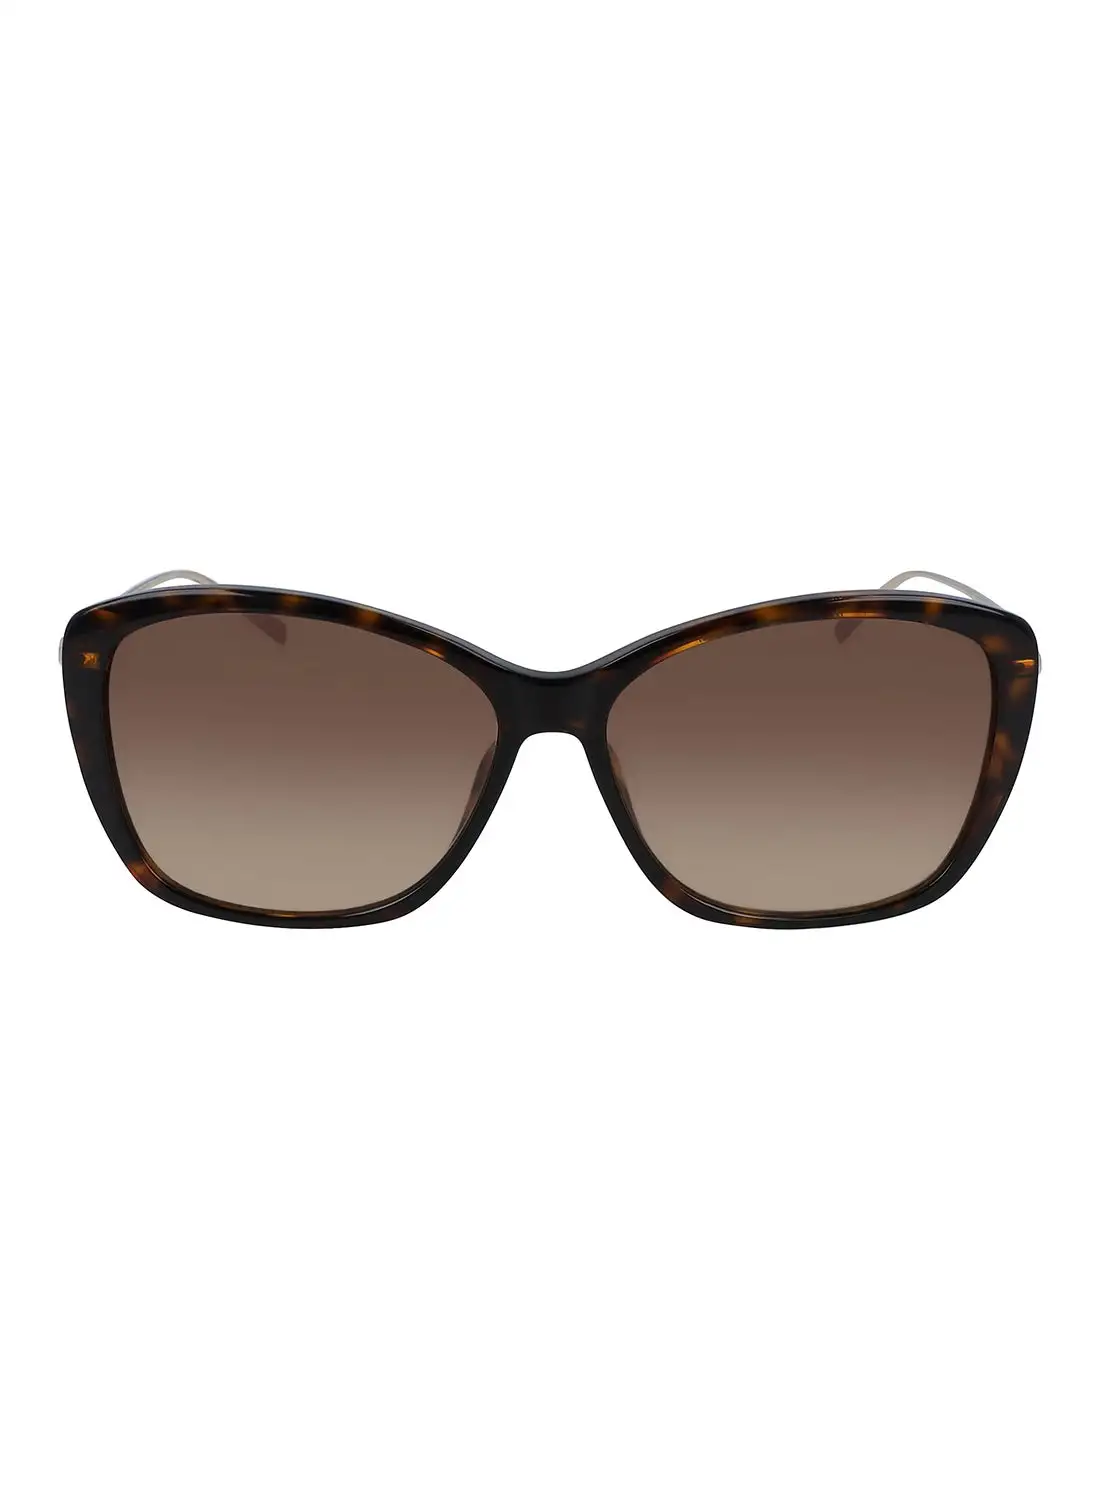 DKNY Women's Cat Eye Sunglasses - DK702S-237-5714 - Lens Size: 57 Mm